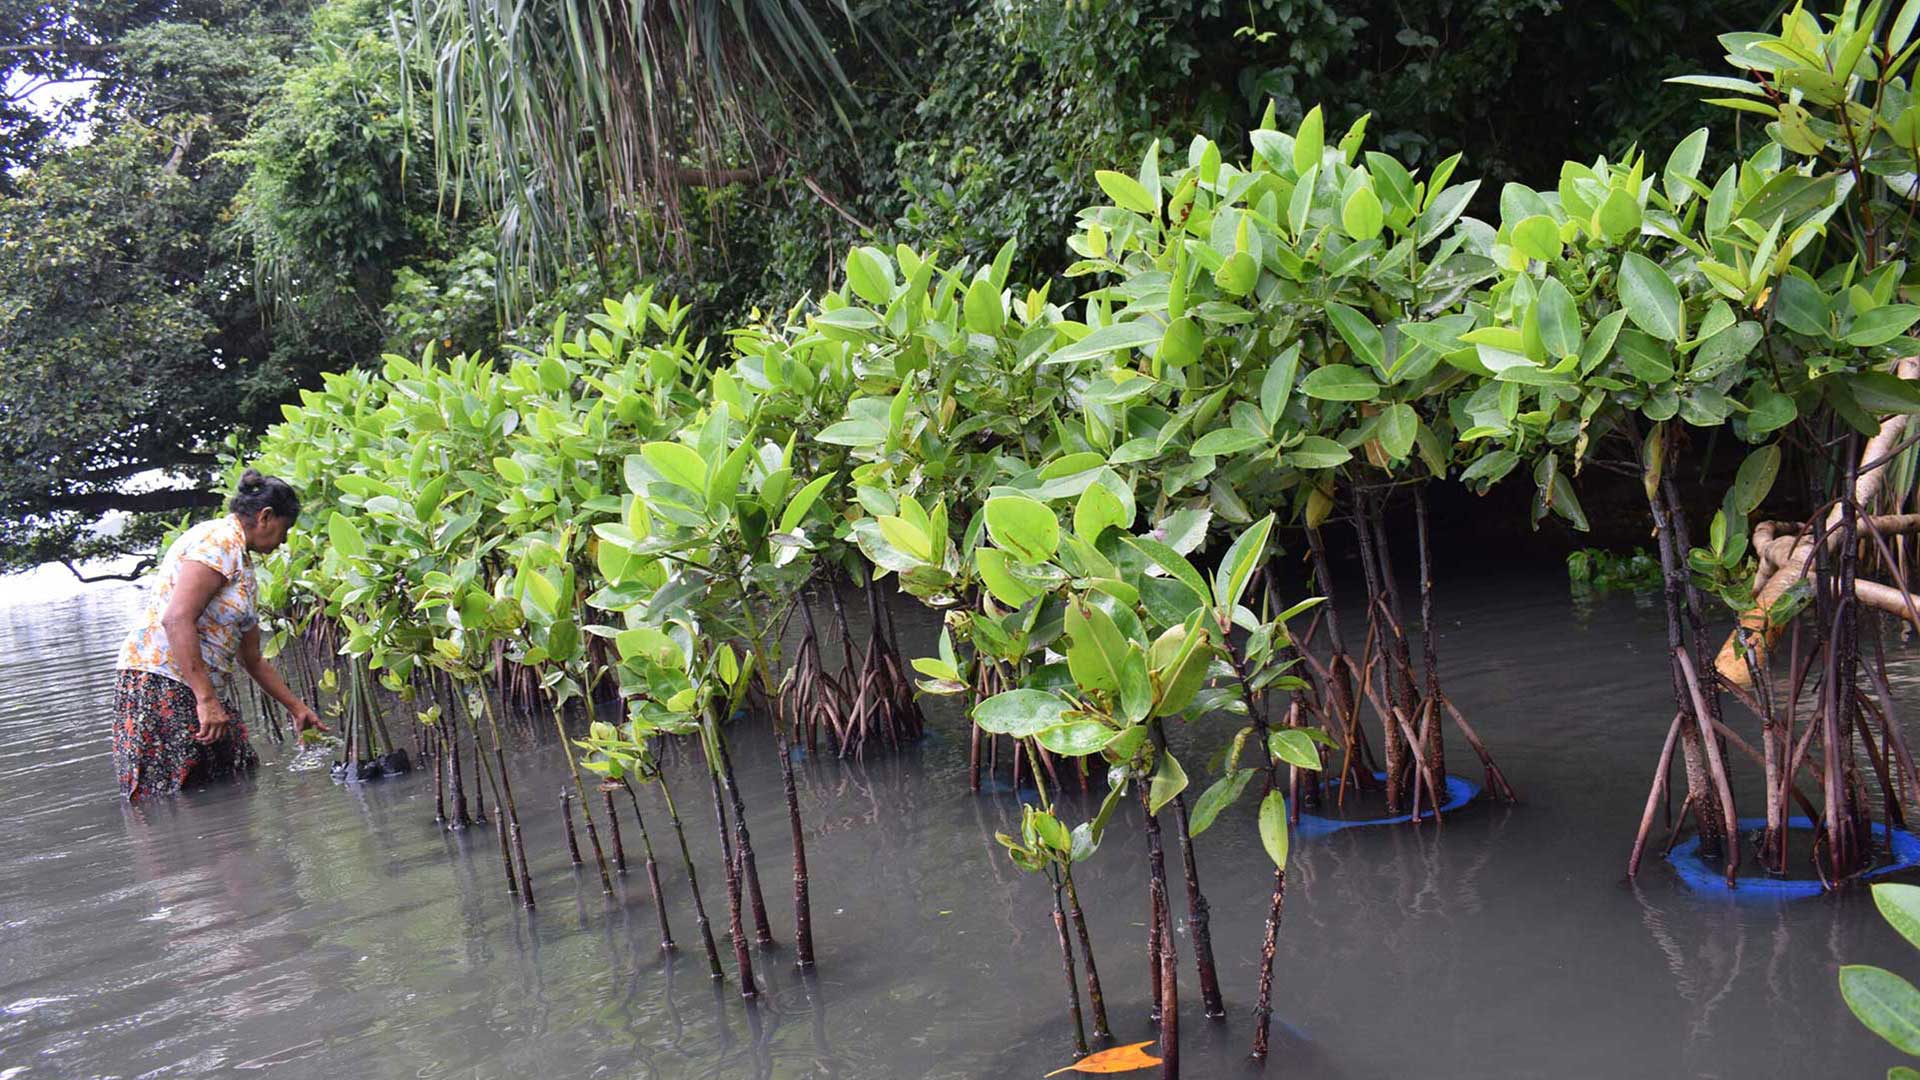 Mangrove vegetation